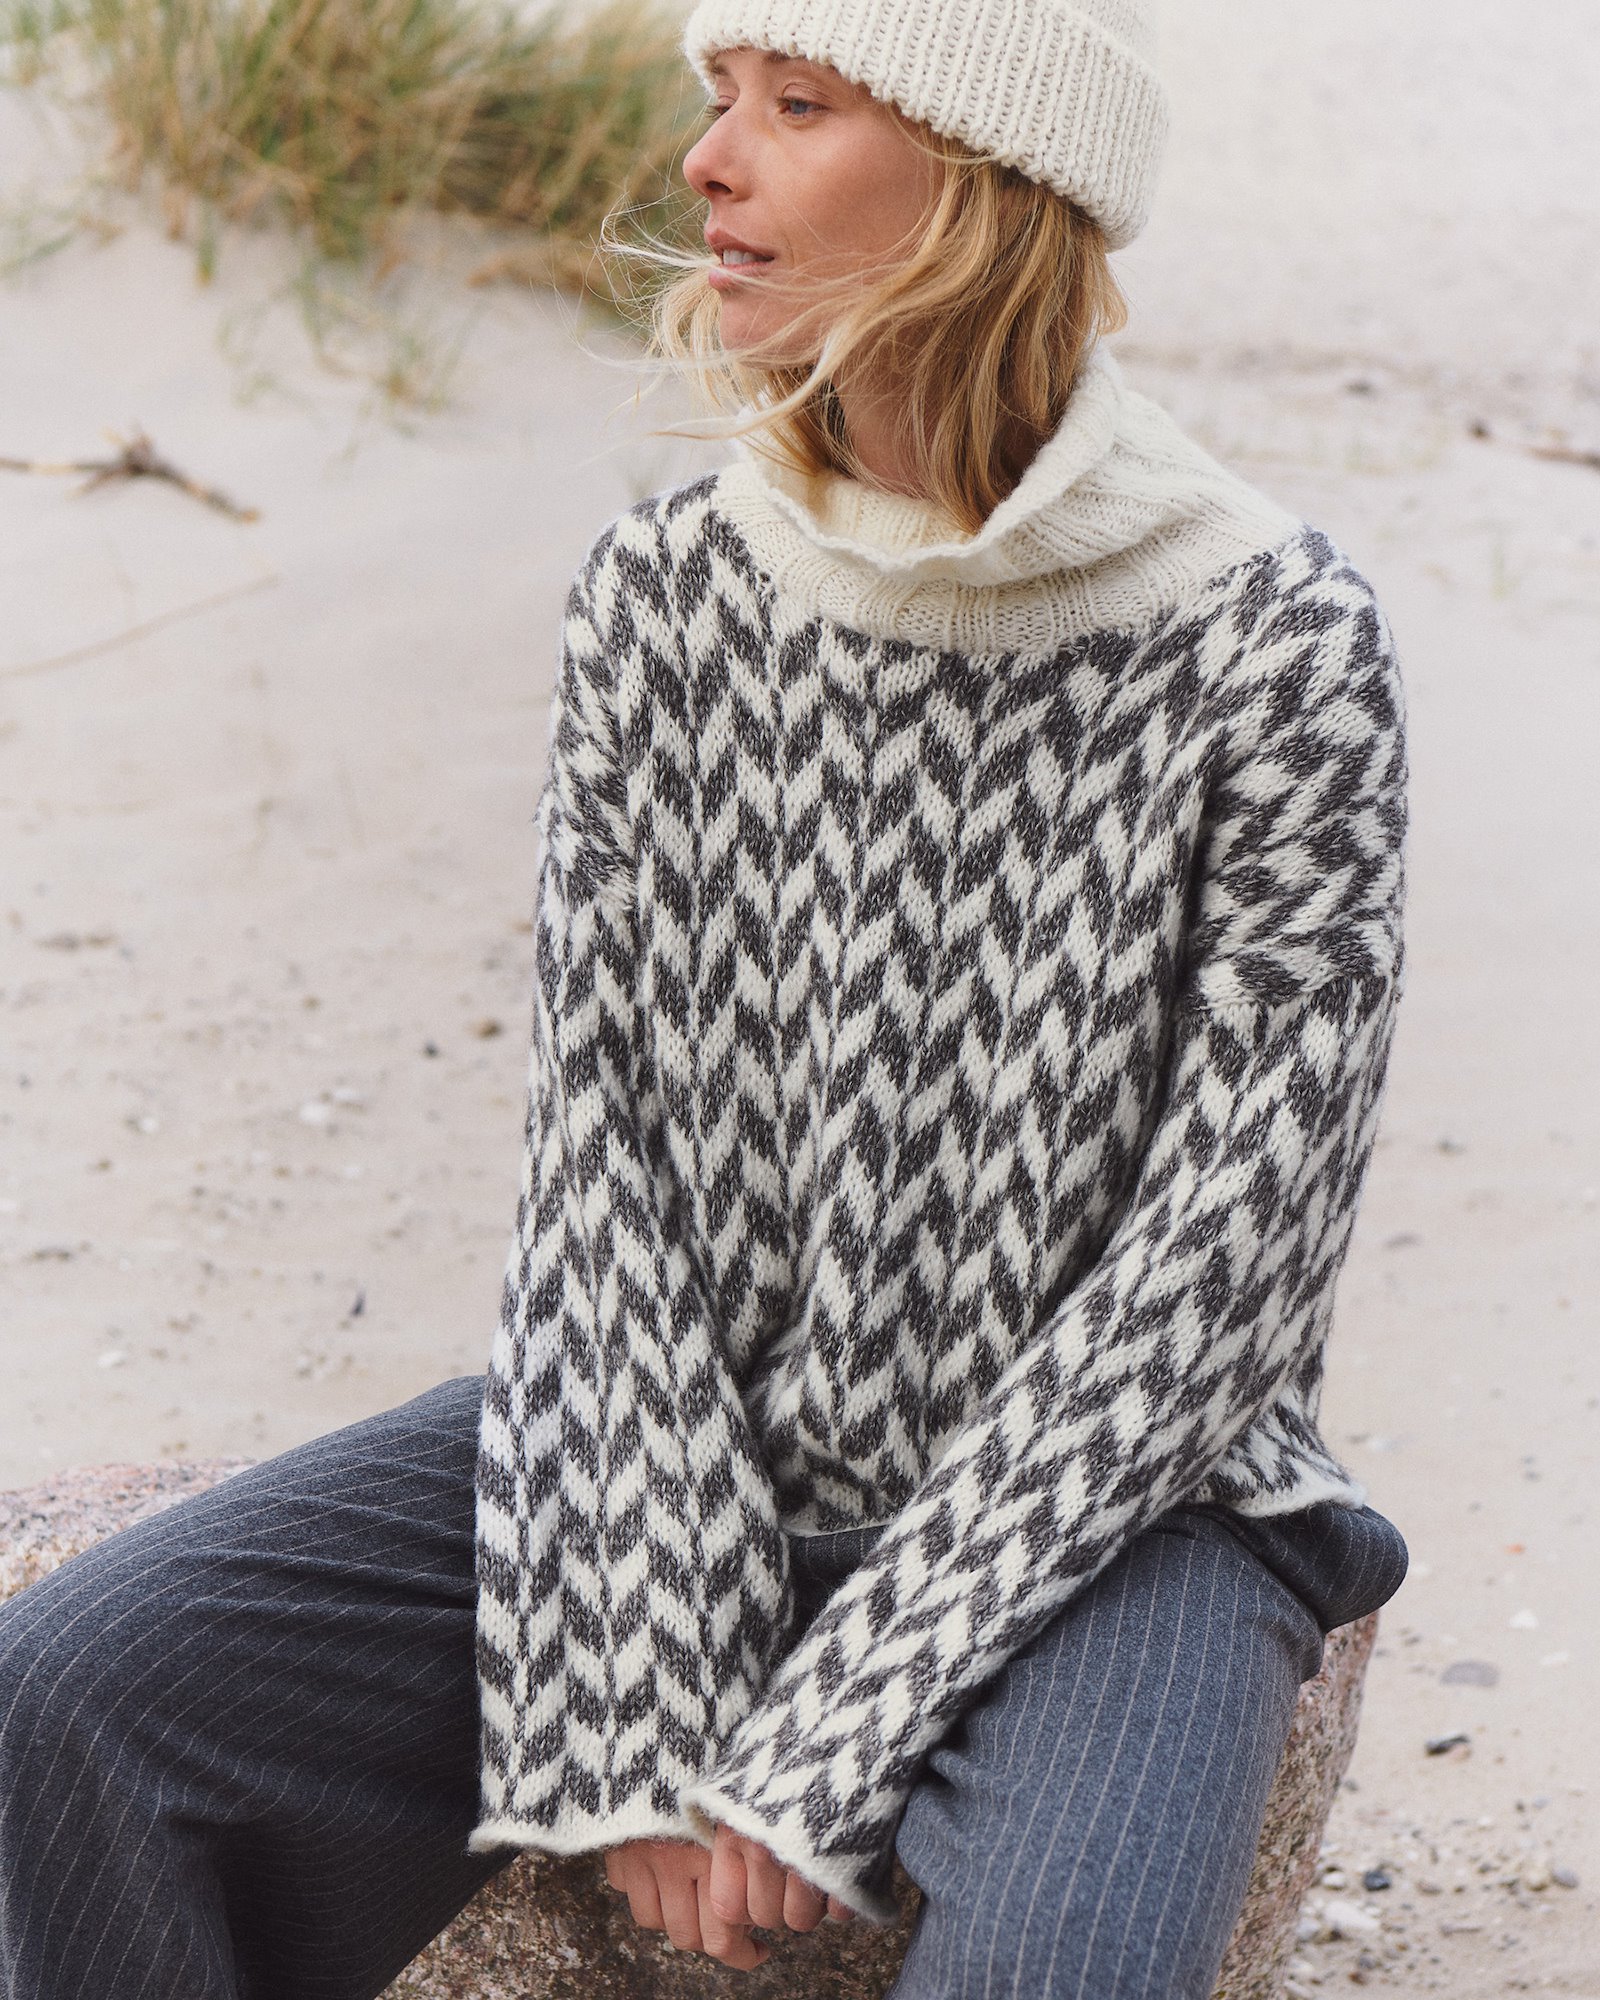 Lana Grossa yarn, knitting pattern: PULLOVER LANA2013_image.jpg